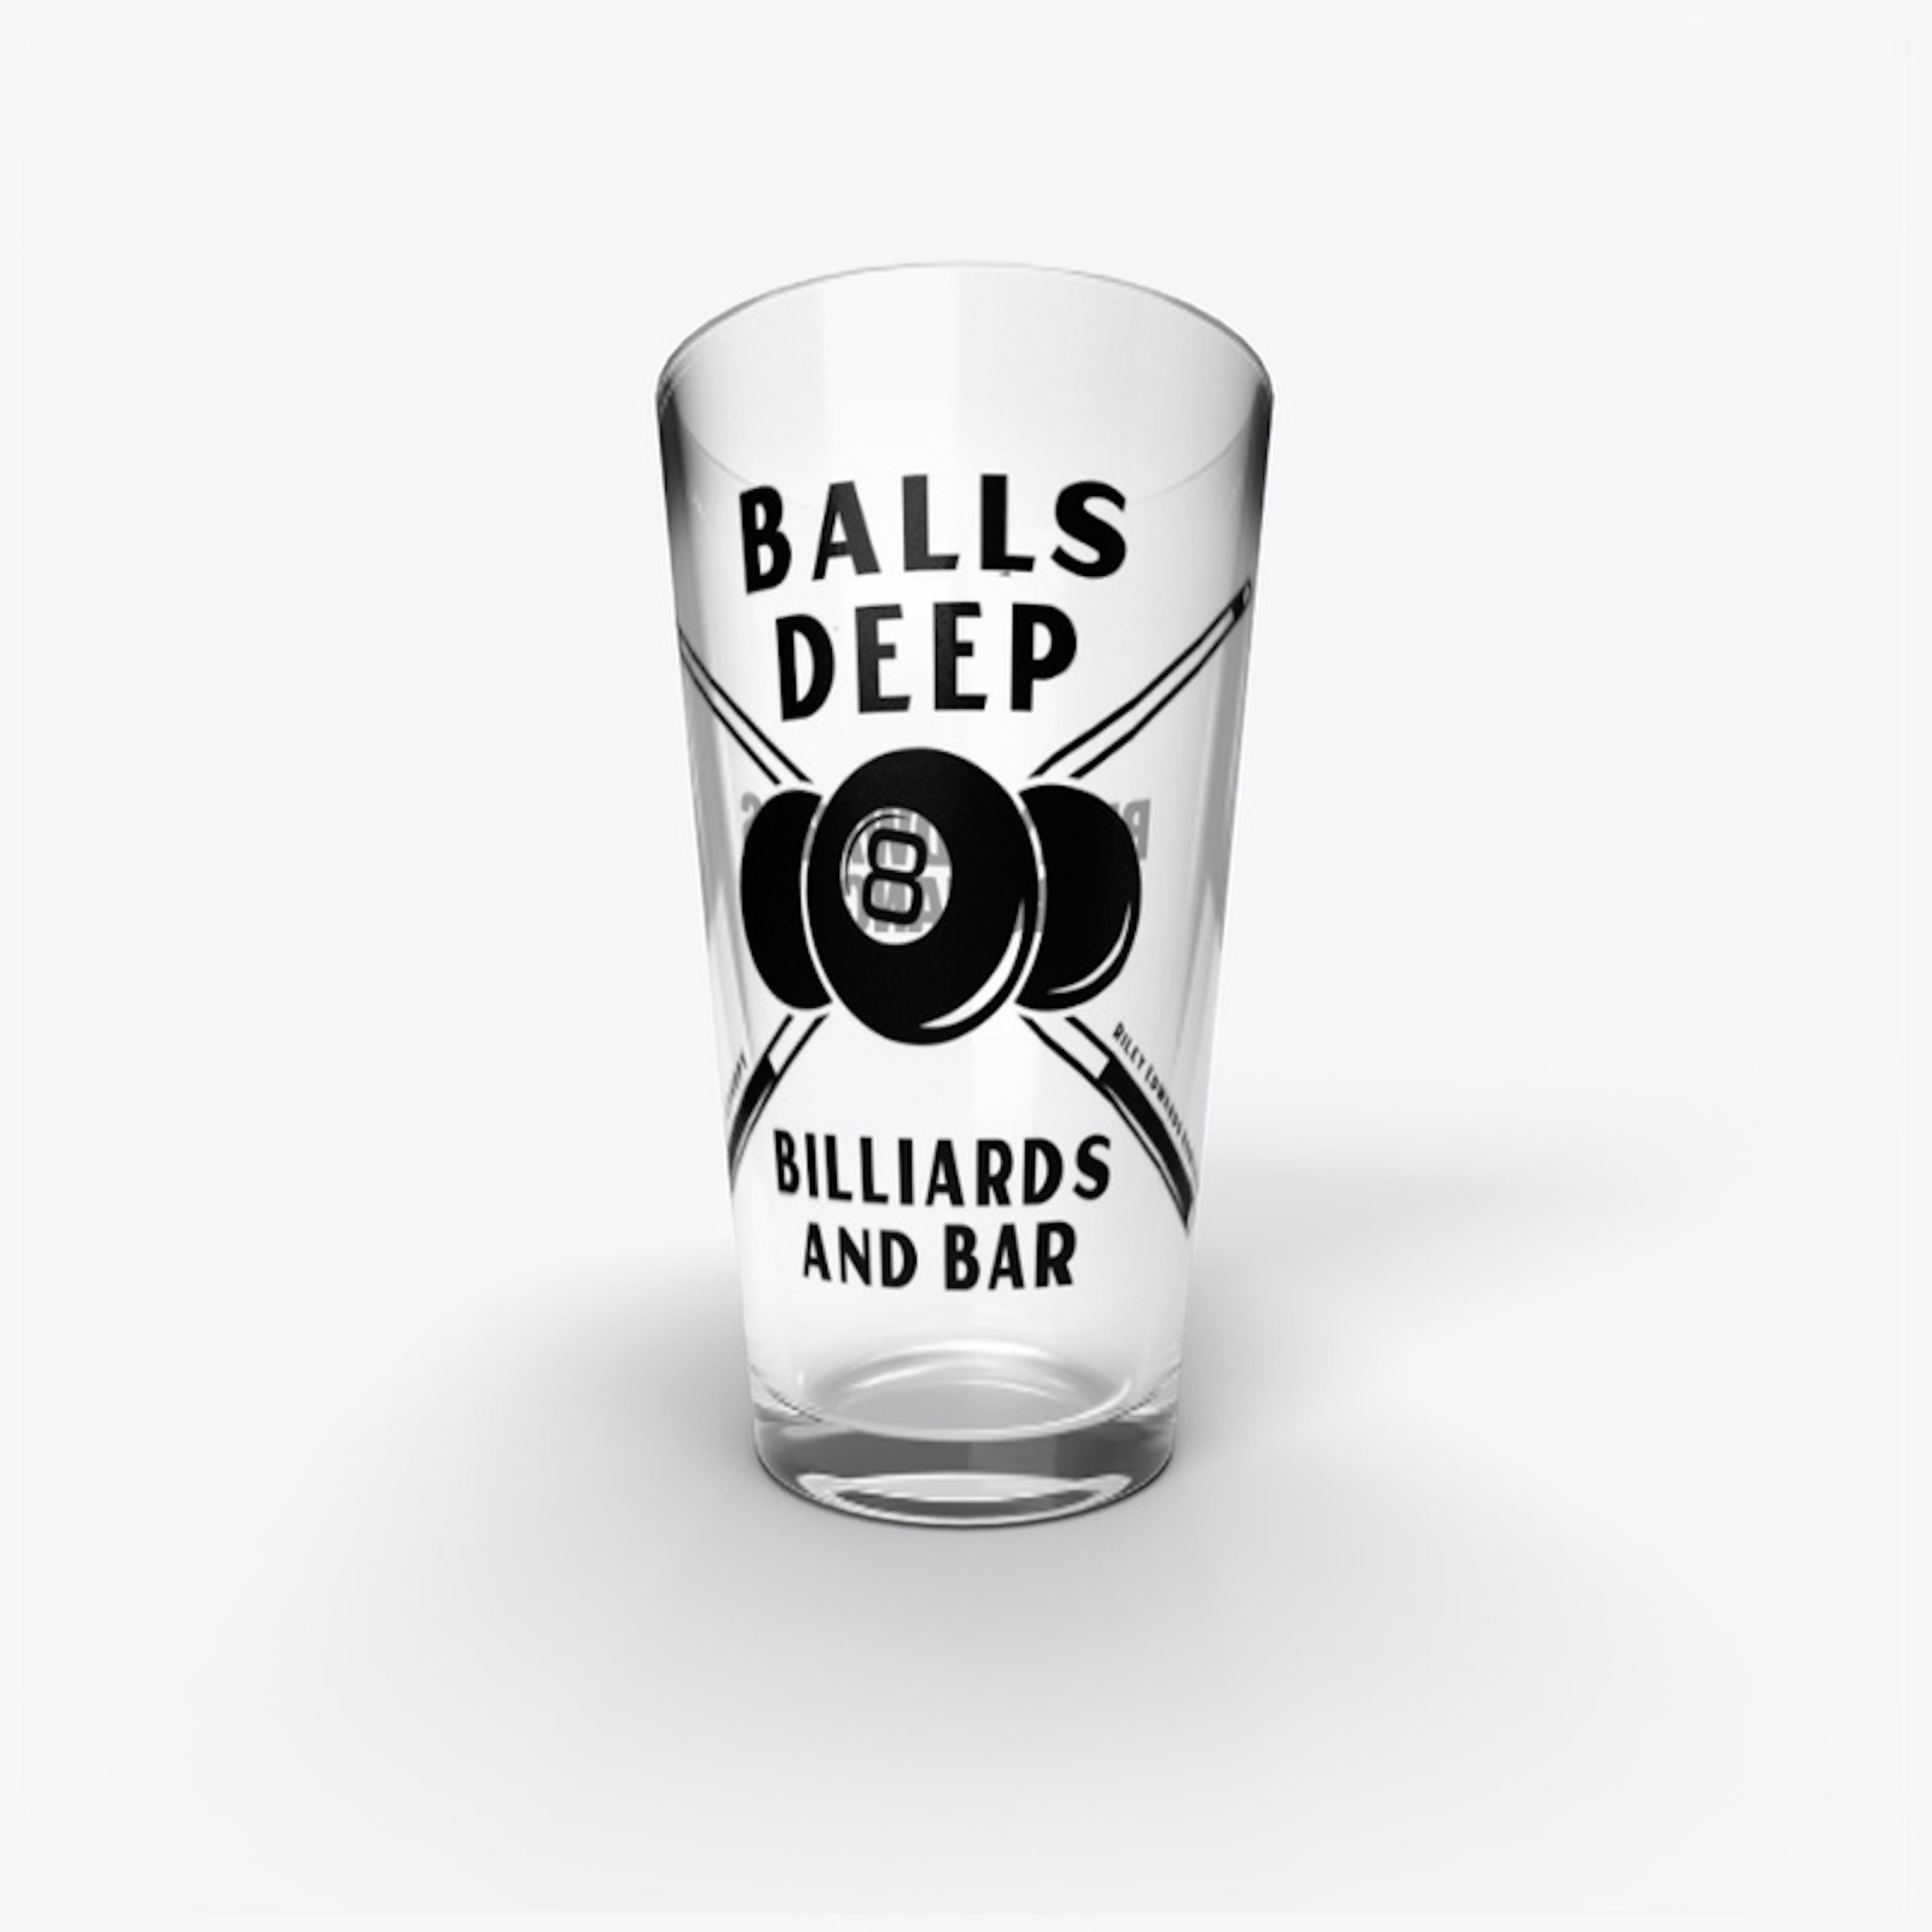 Balls Deep Billiards and Bar